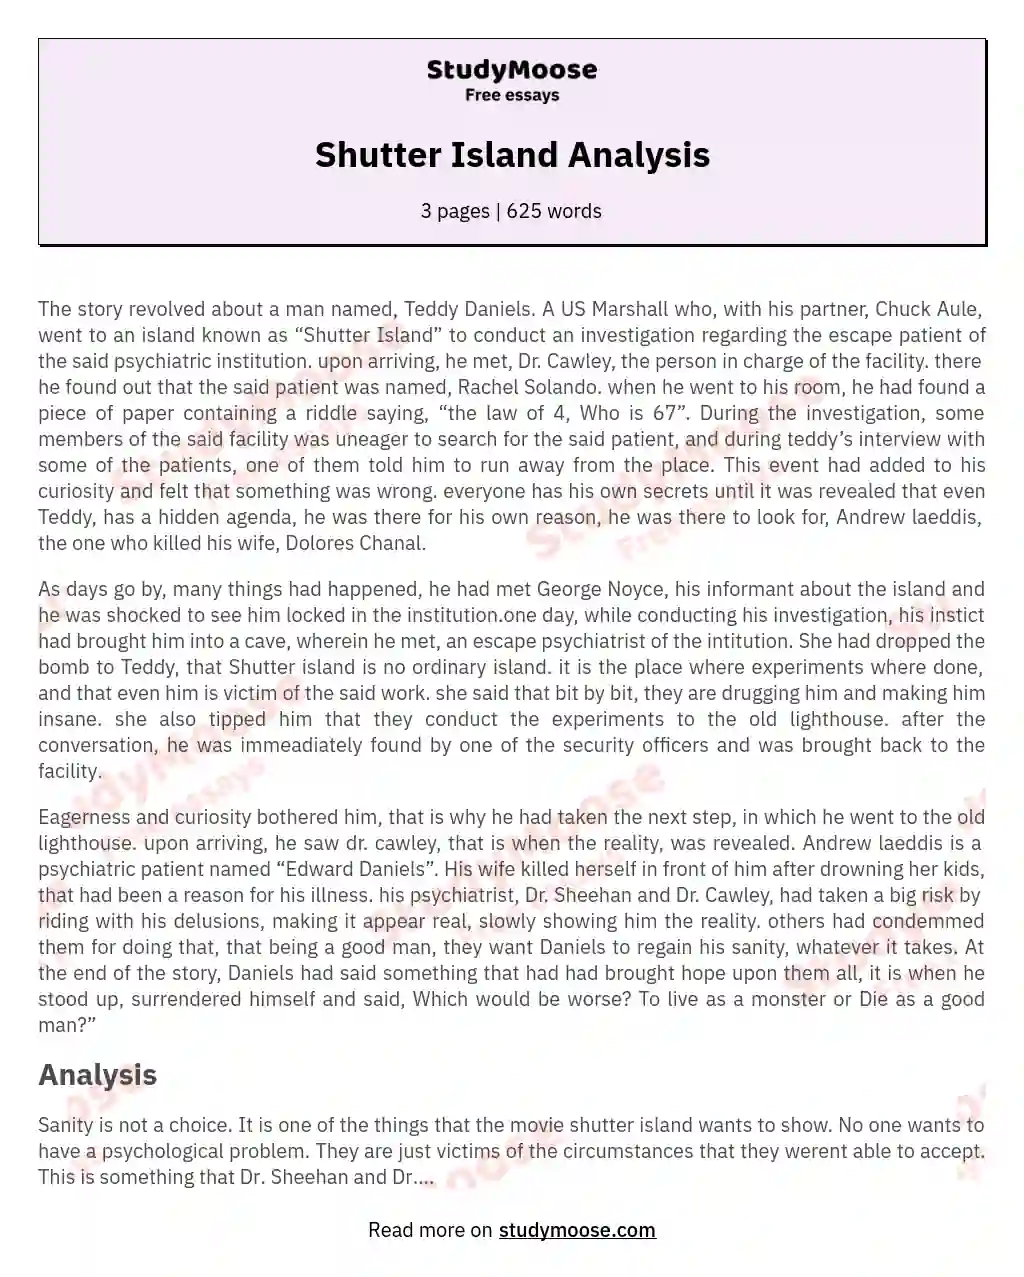 Shutter Island Analysis essay